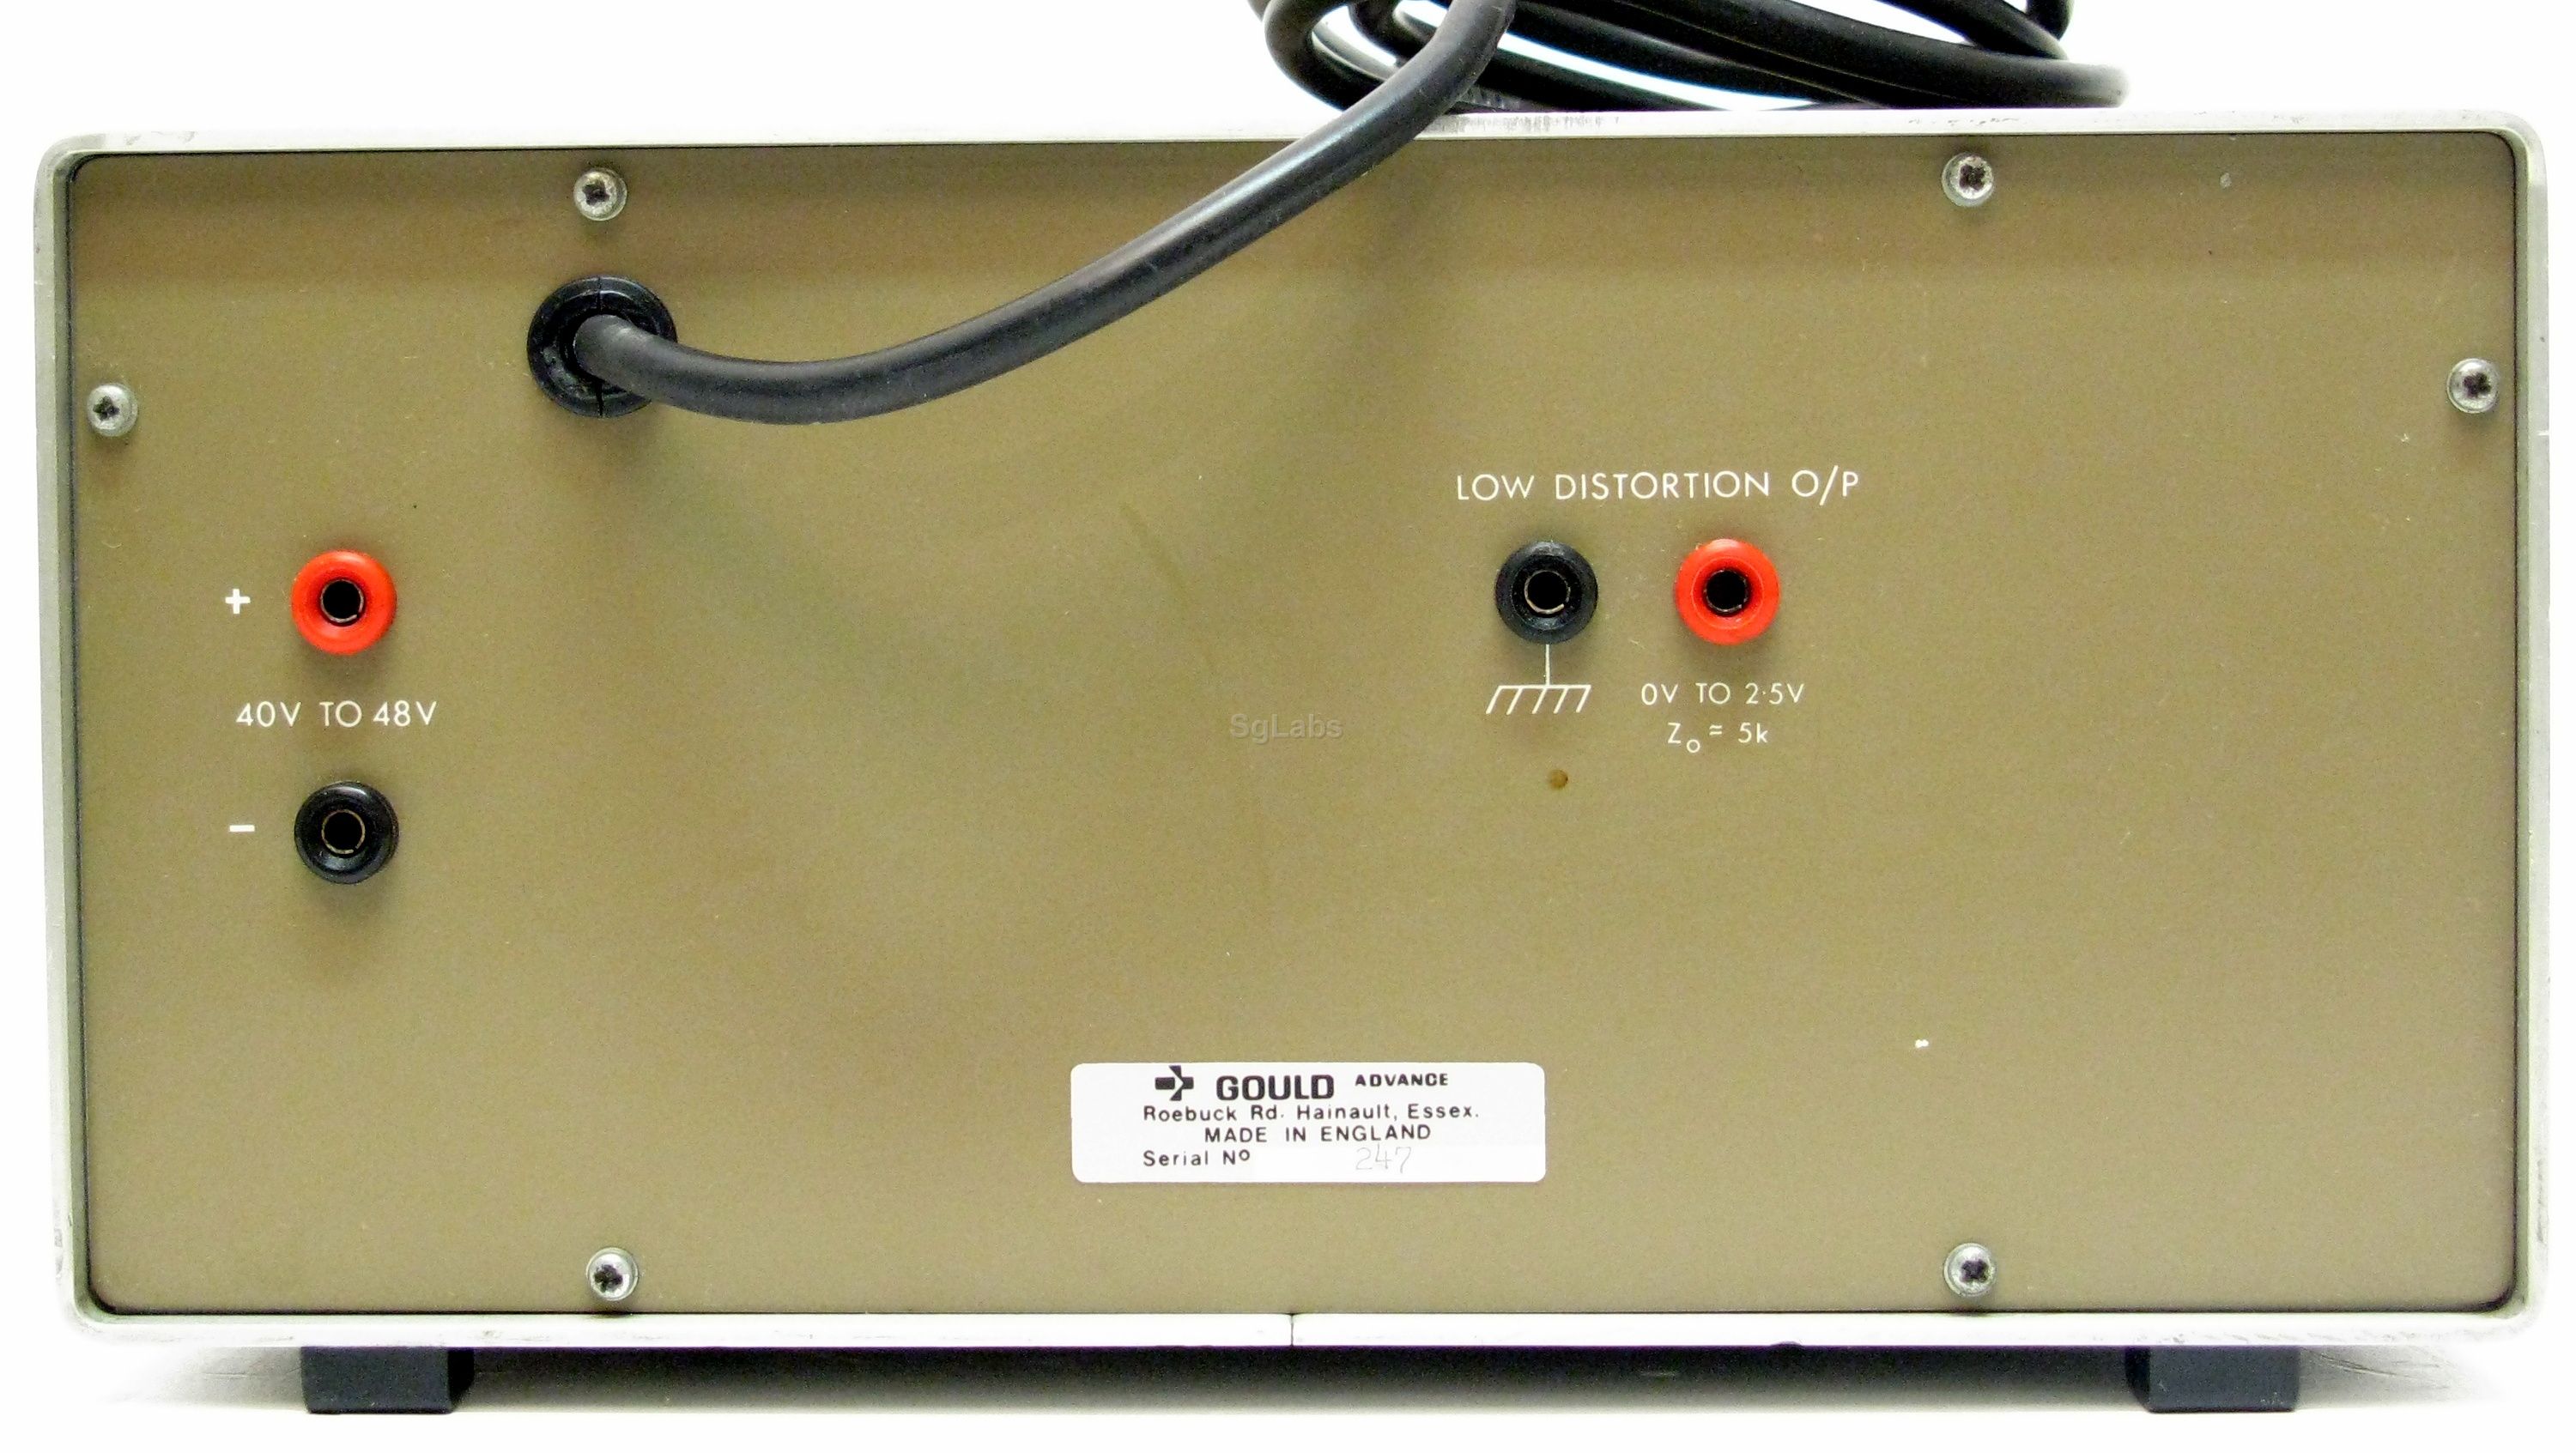 Gould J3B 100KHz  Audio Signal Generator Amplifier And Wien bridge Oscillator 